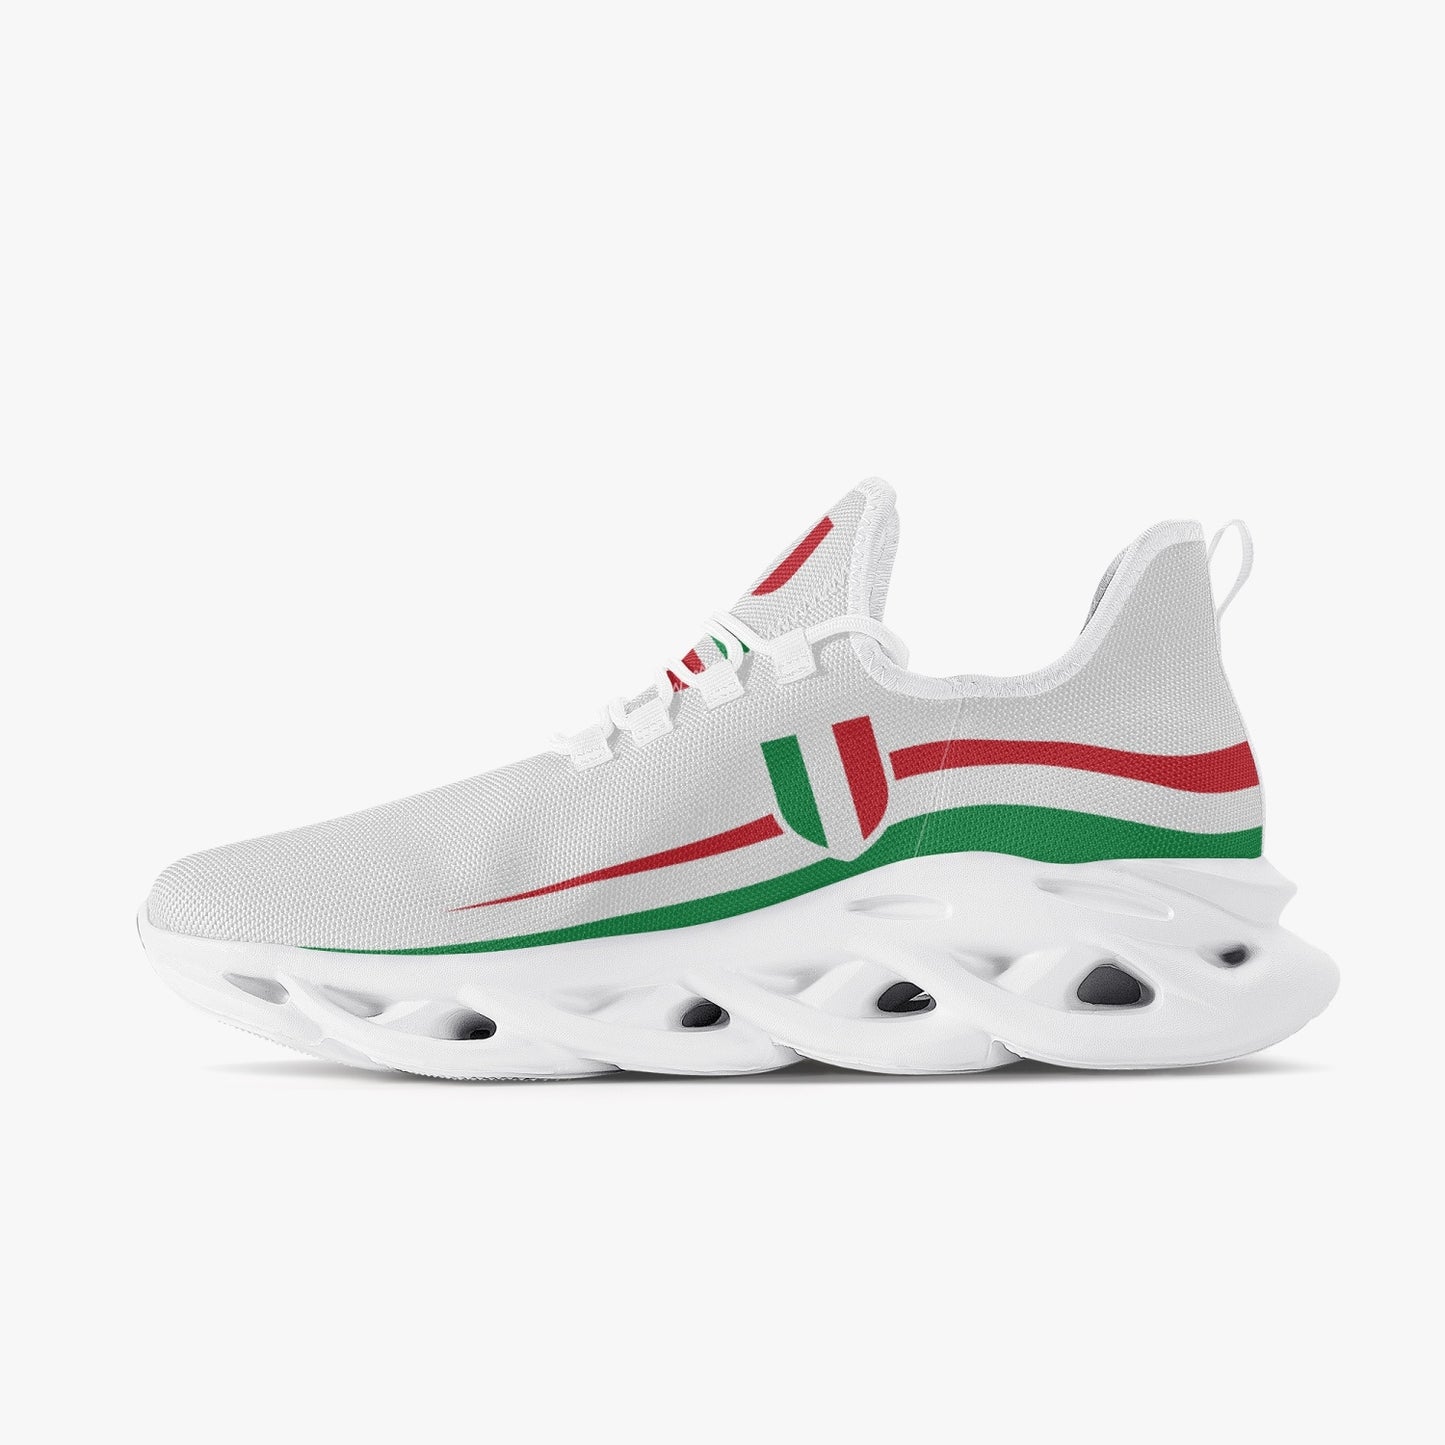 Sneakers Italy white - men's